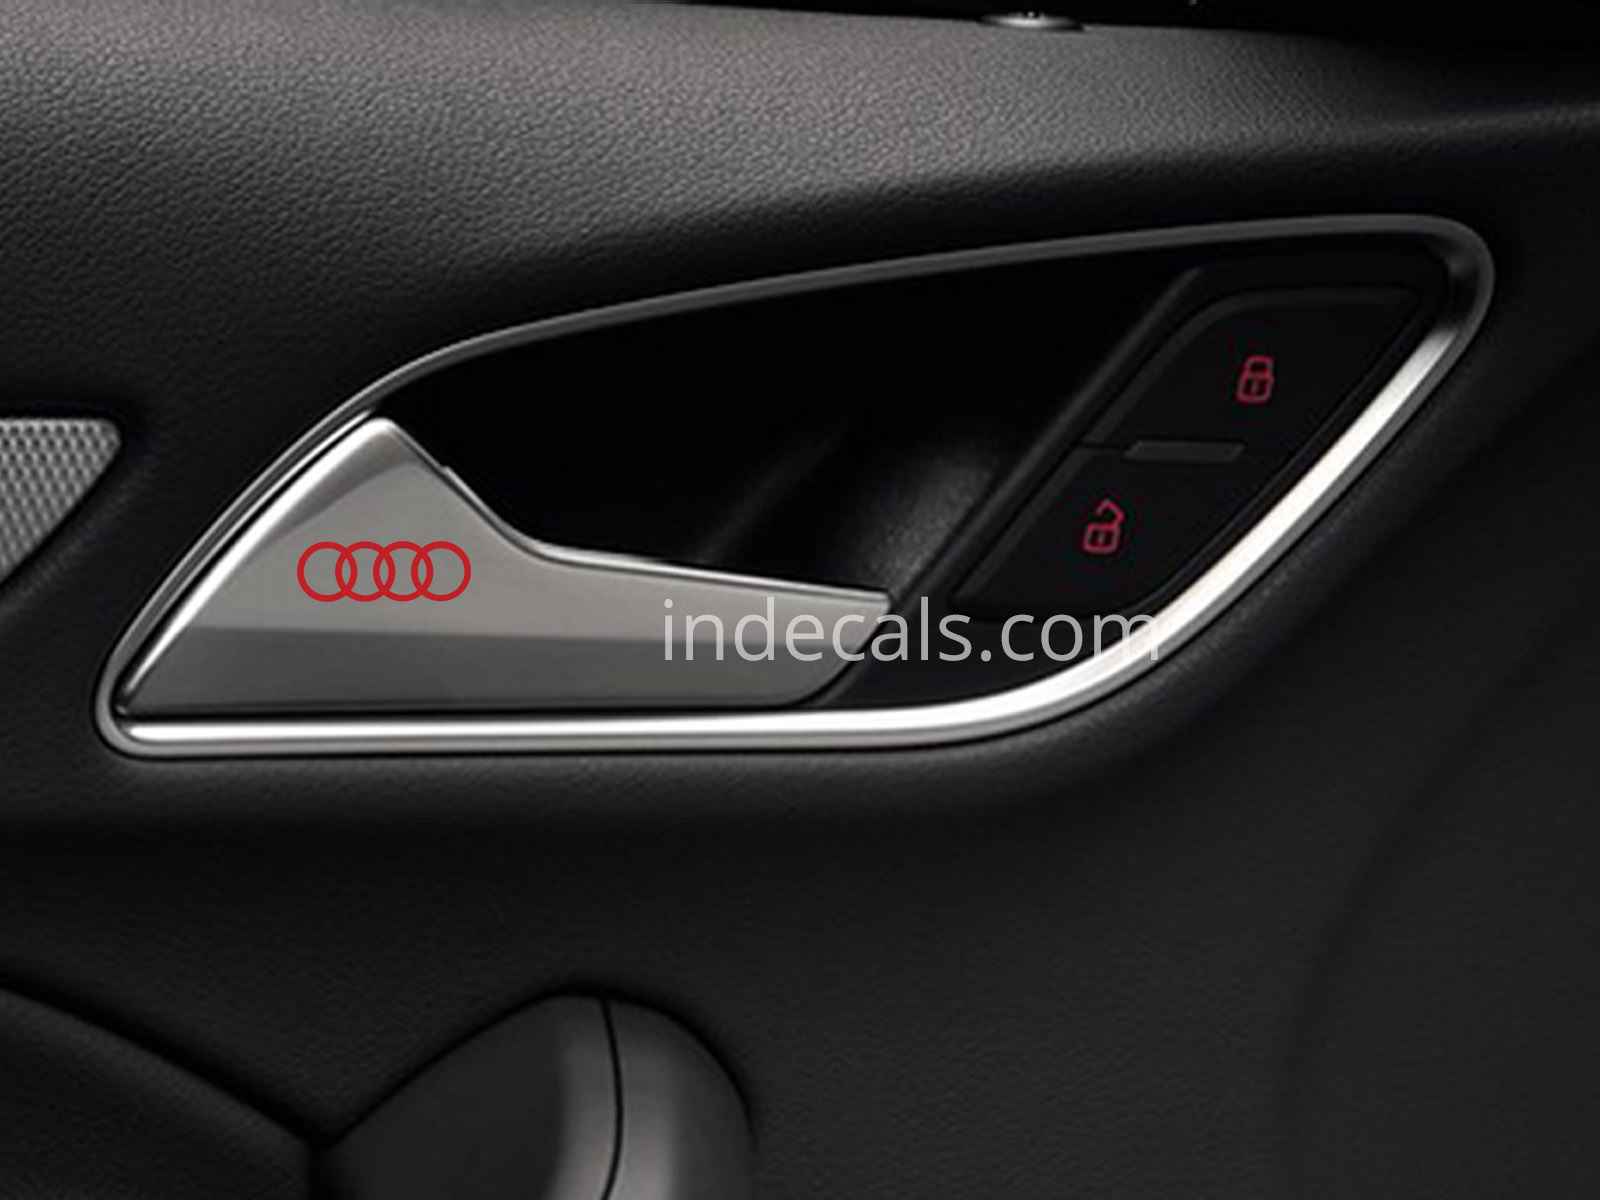 6 x Audi Rings Stickers for Door Handle - Red